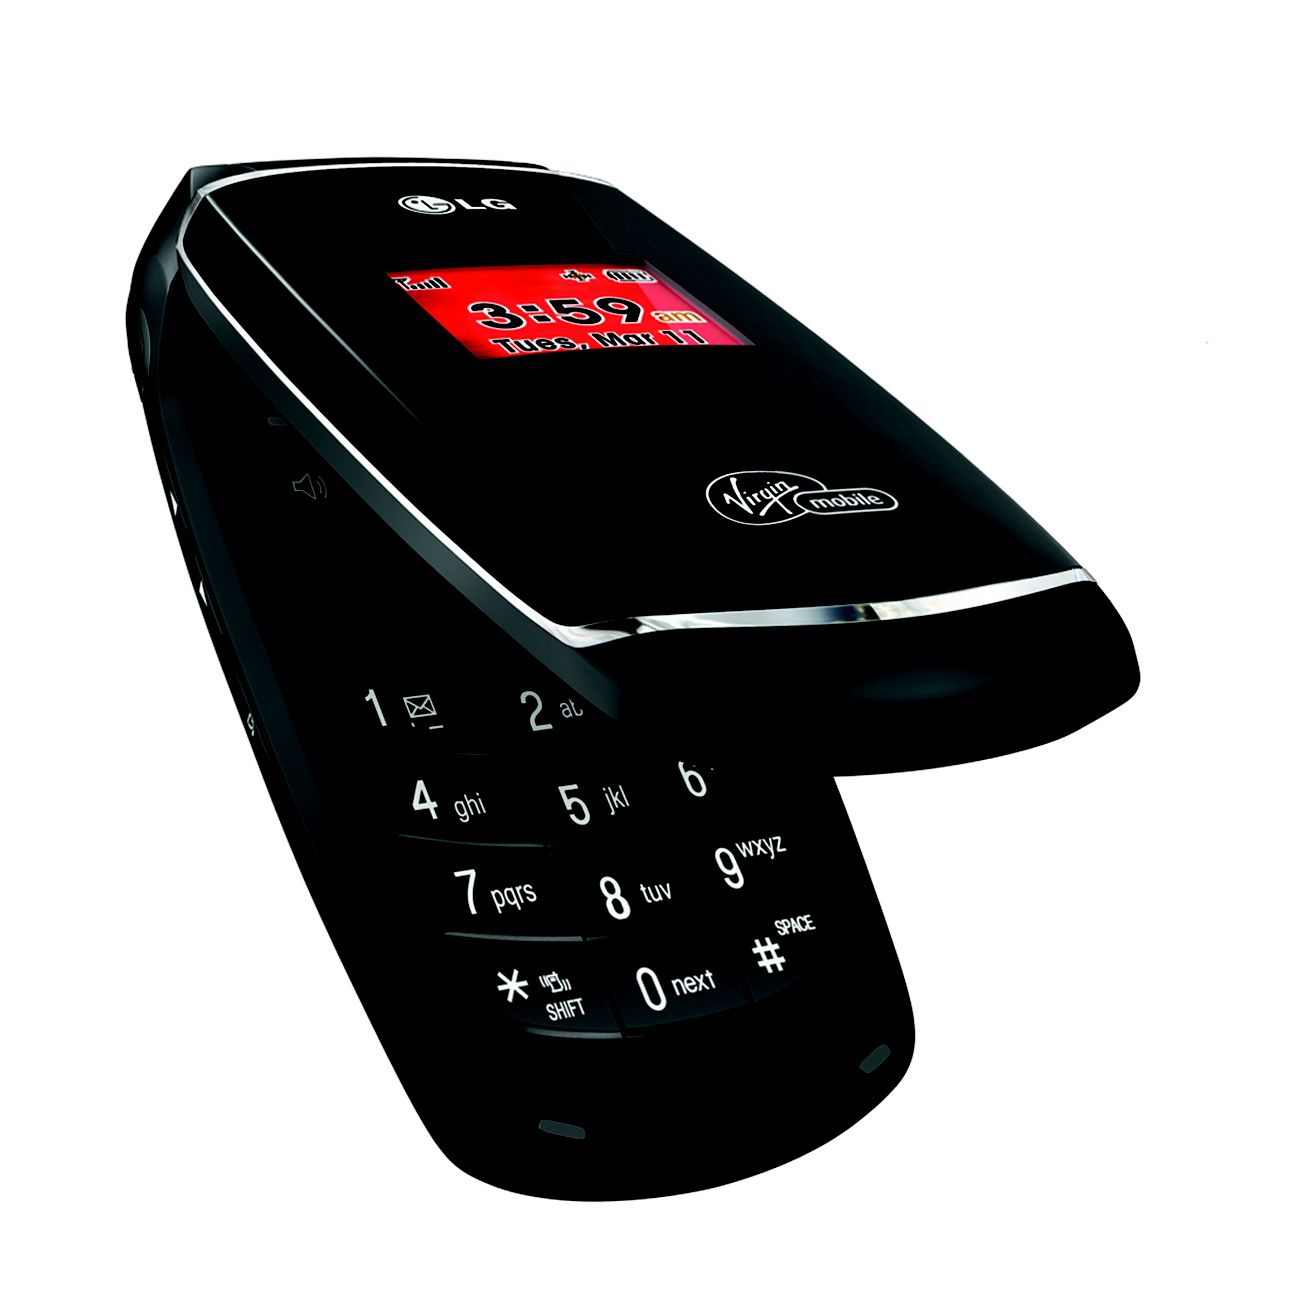 cellular Virgin phones prepaid mobile